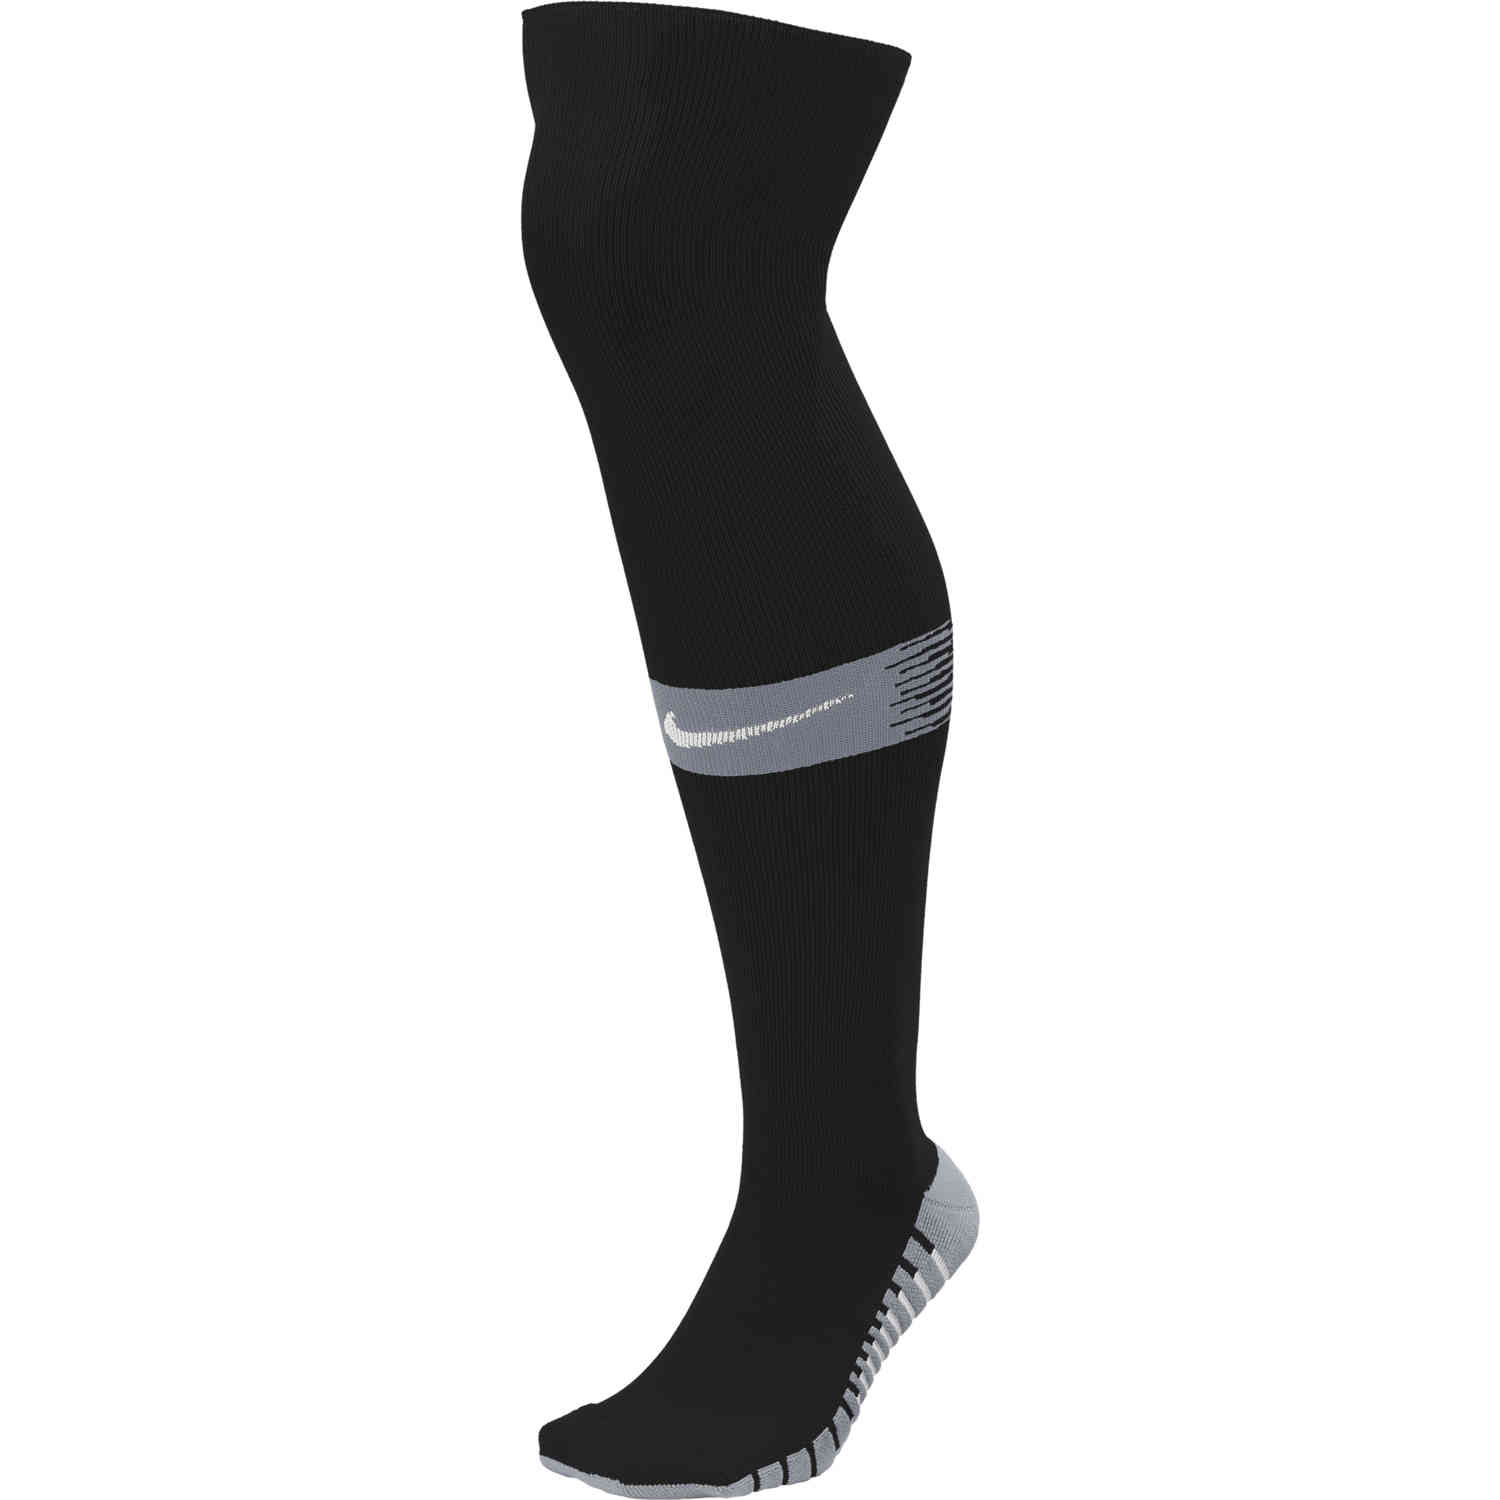 Nike Matchfit Team Soccer Socks - Black 